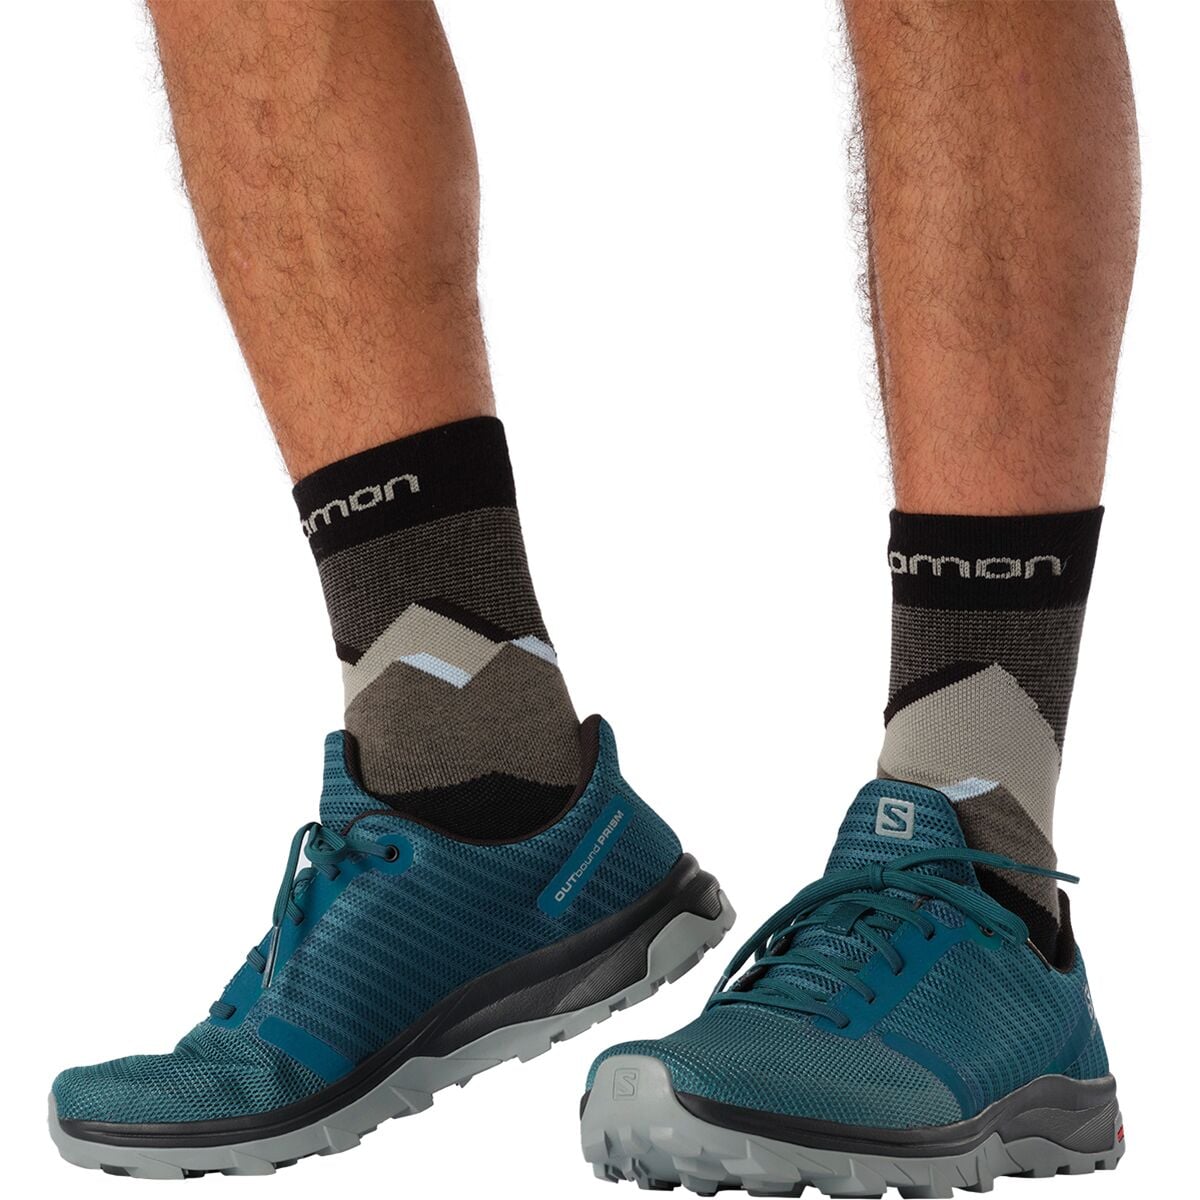  Salomon Outbound Prism Gore-TEX Hiking Shoes for Men Climbing,  Legion Blue/Mallard Blue/Monument, 8